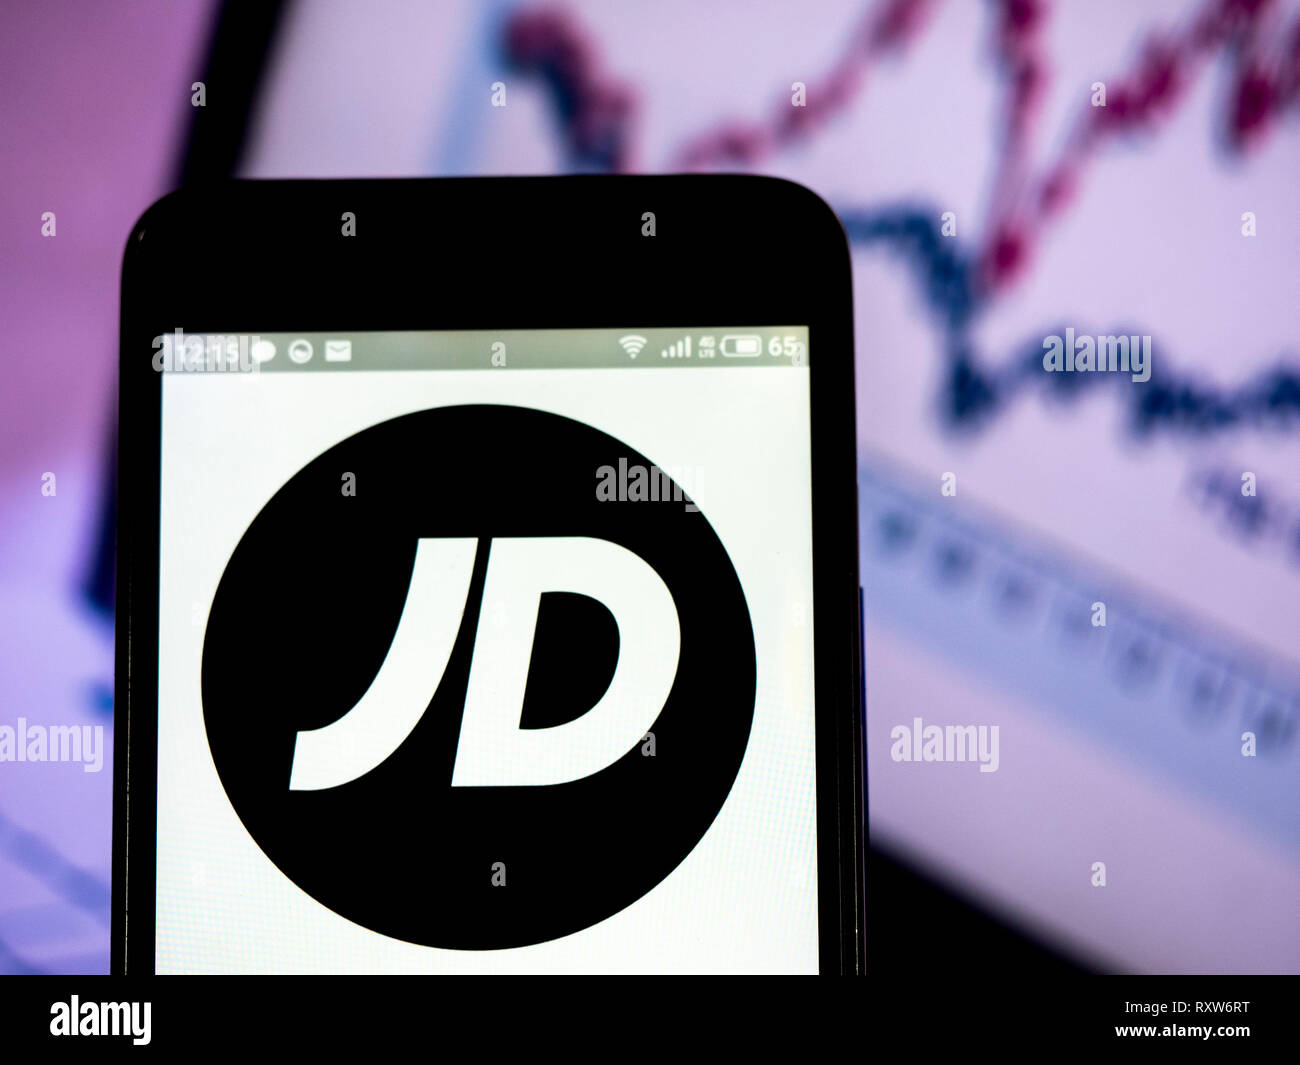 JD Sports Fashion plc company logo seen displayed on smart phone. Stock Photo